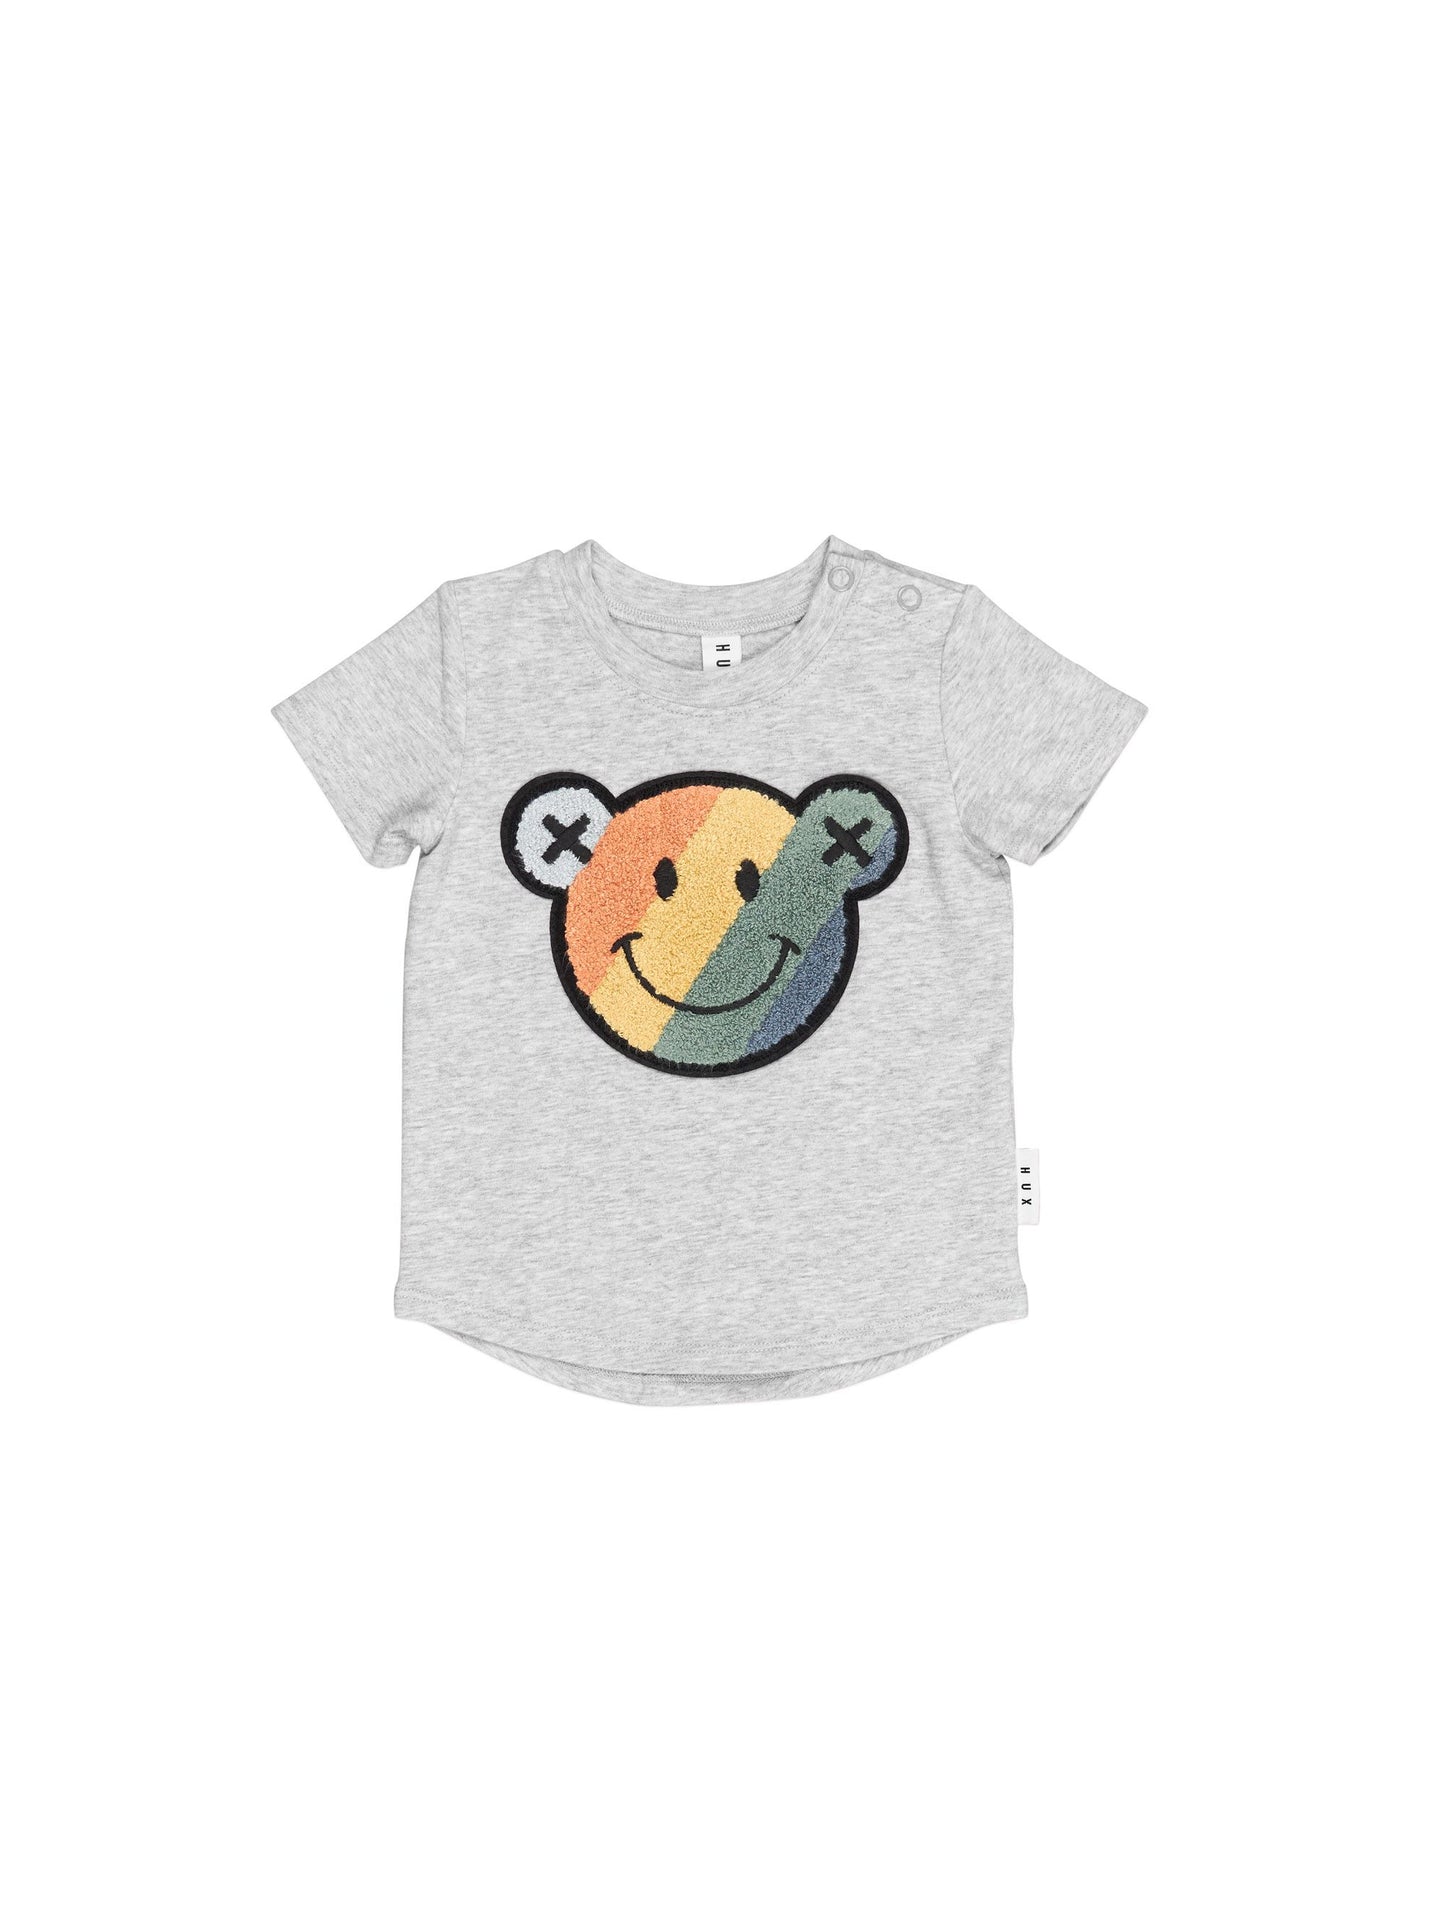 Smiley Rainbow T-Shirt